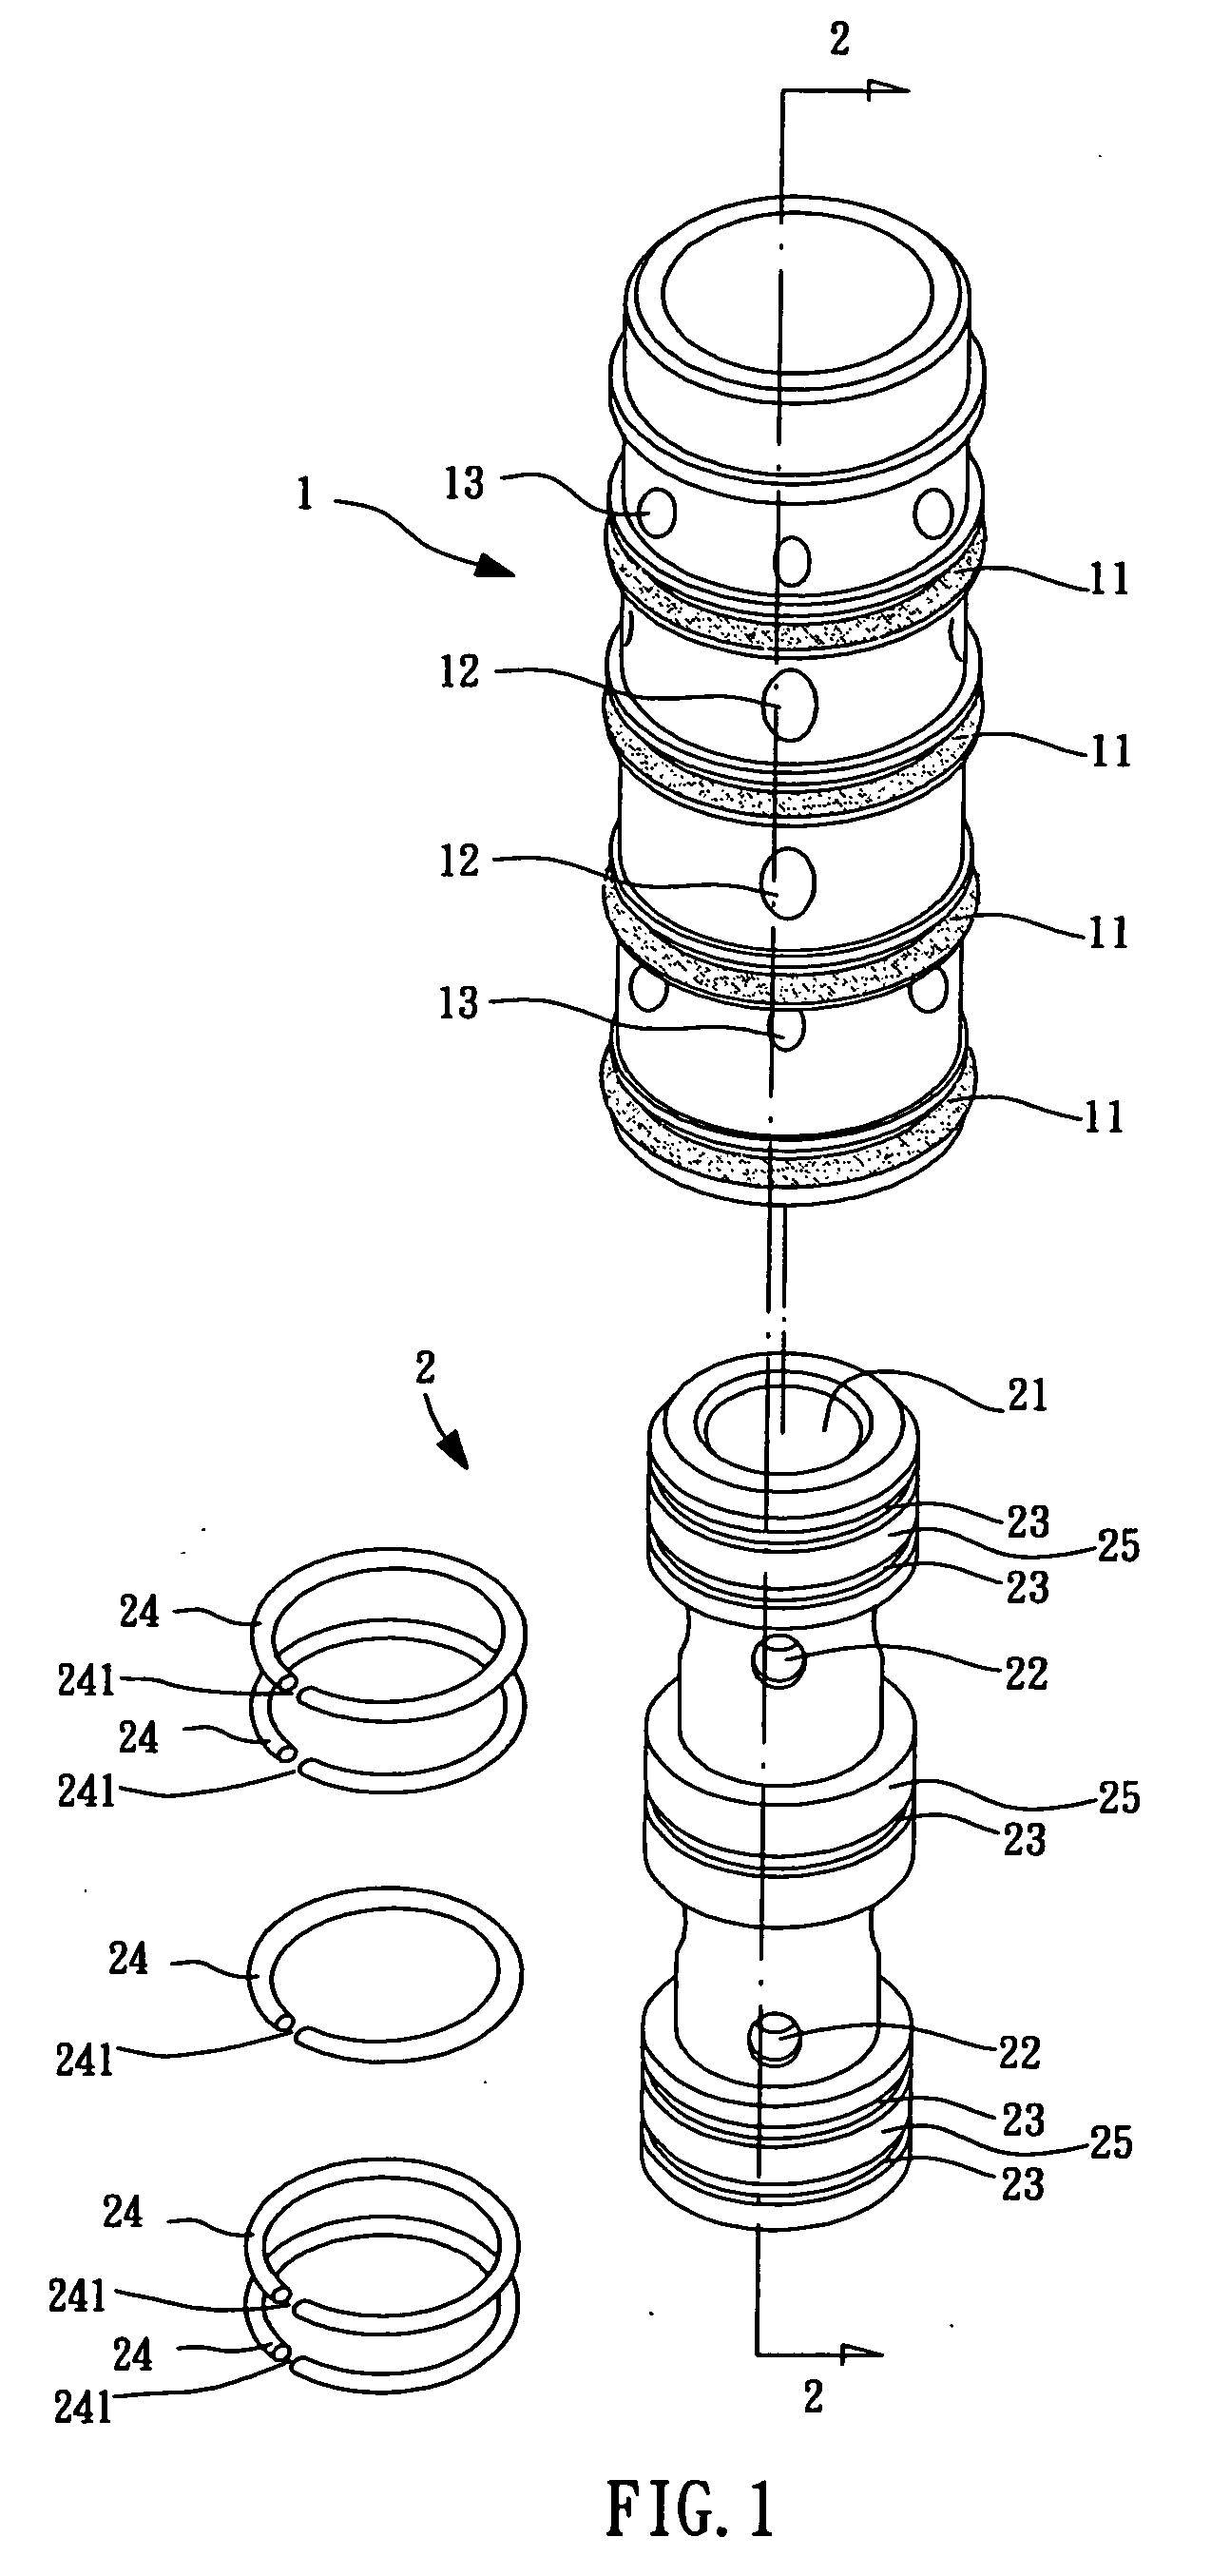 Faucet with constant temperature valve